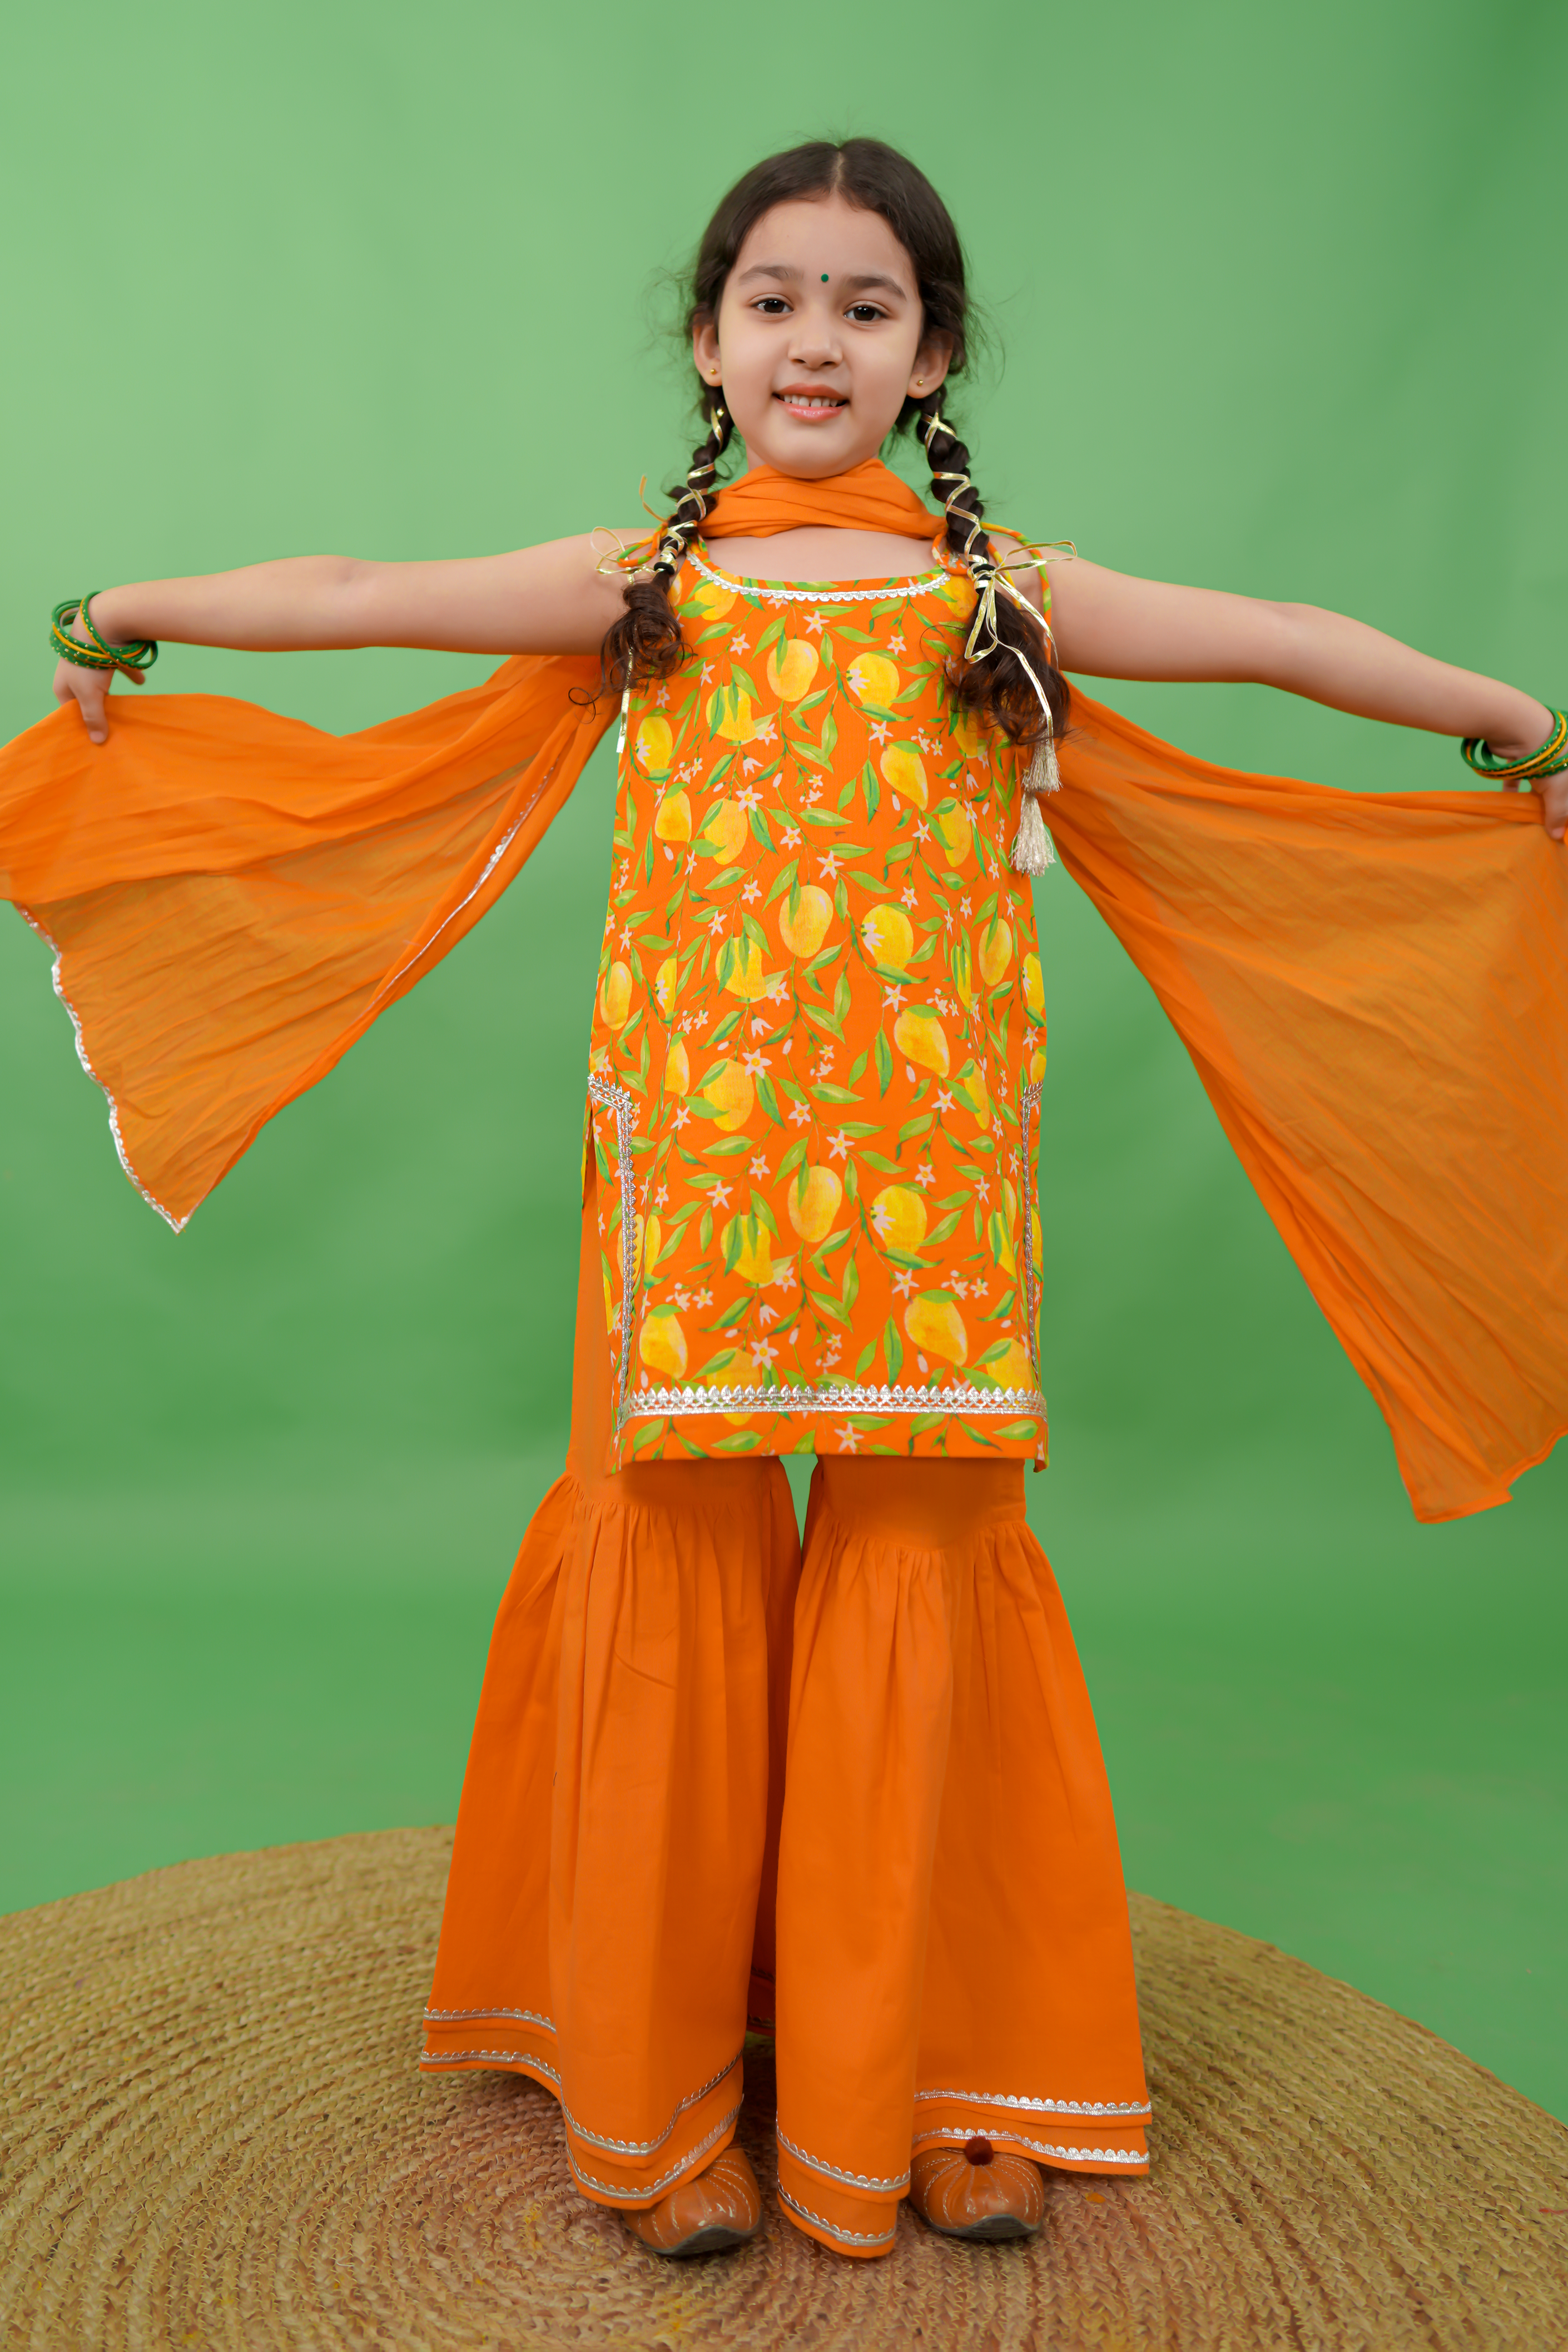 Sharara dress Indian Dupatta 3 Piece Suit Set Kurta Plazzo Women's Festive  Wear | eBay